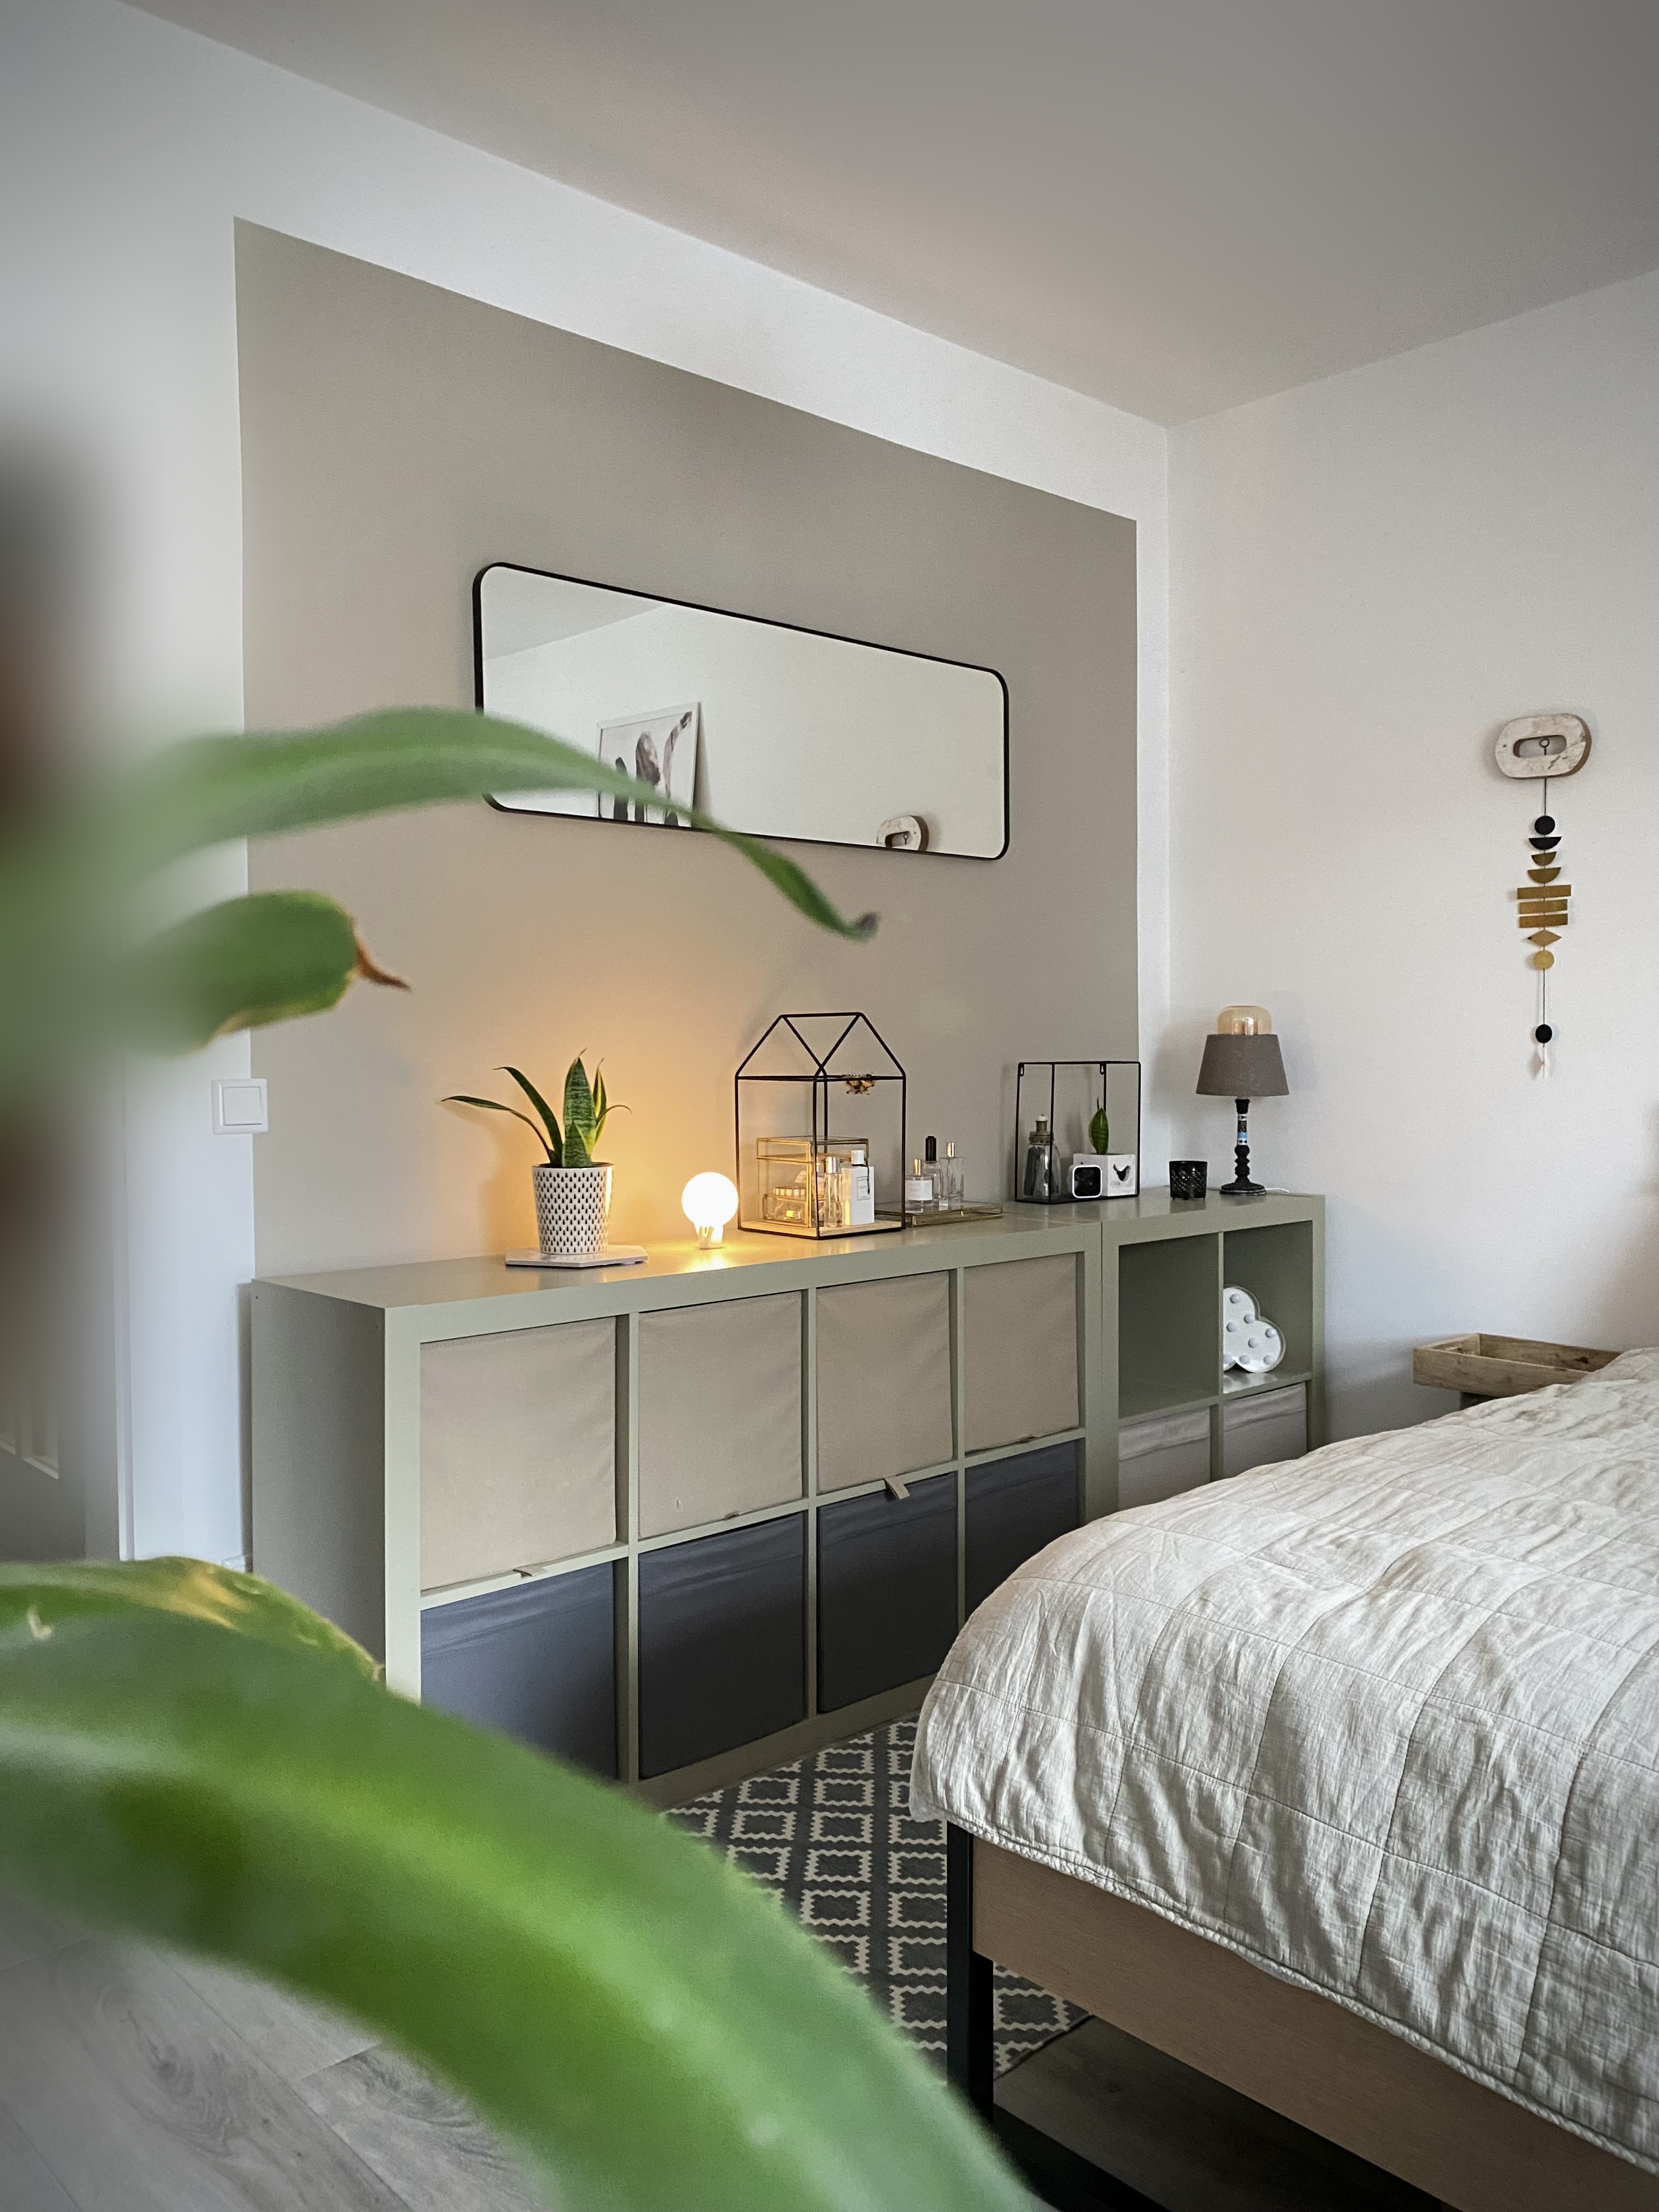 bedroom #makeover — Hotel-Feeling Ton in Ton #wand + #ikearegal — #salbeifarben
🤍 + kleine Mini Projekte on top:
#weinkistendeko #kacheldeko
#DIY